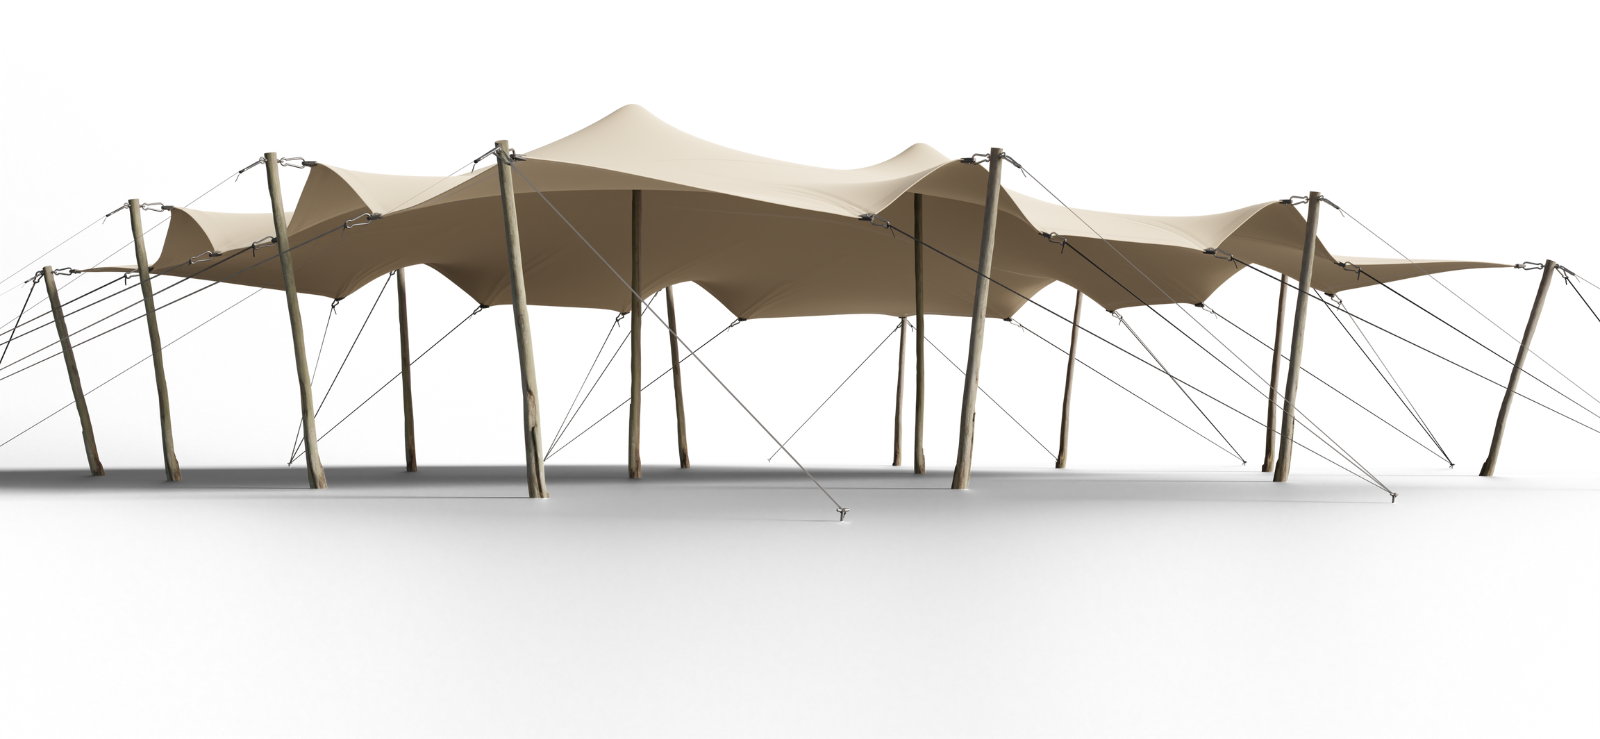 Tente stretch nomade berbere location vente suisse 10x12m